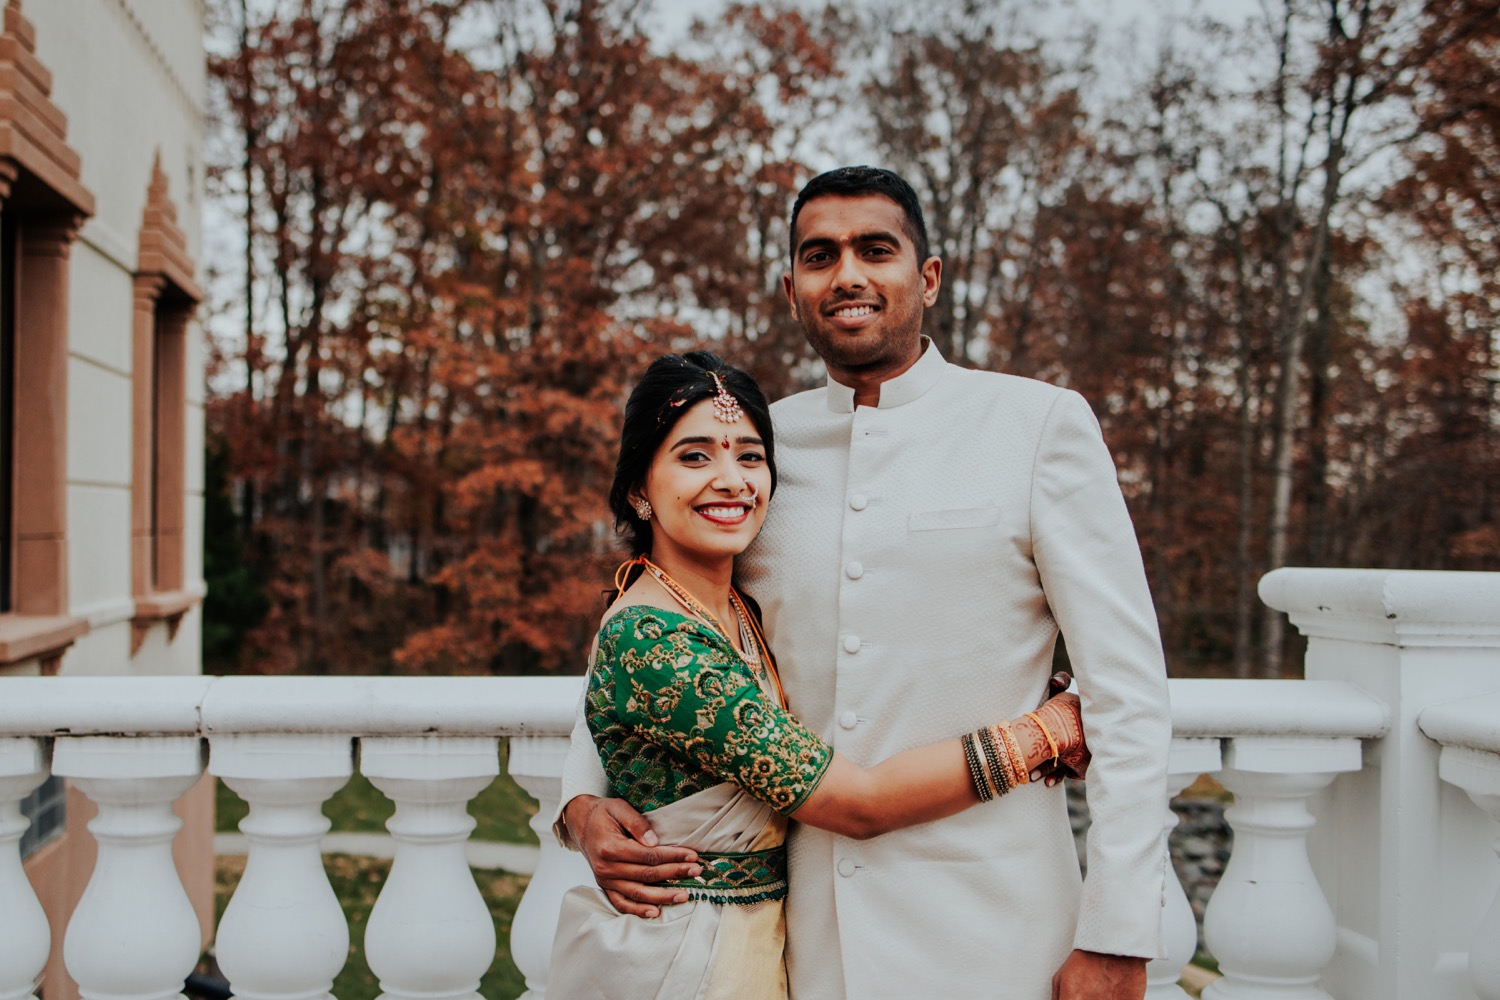 Indian Wedding Photography: Capturing Eternal Love. Book Now!